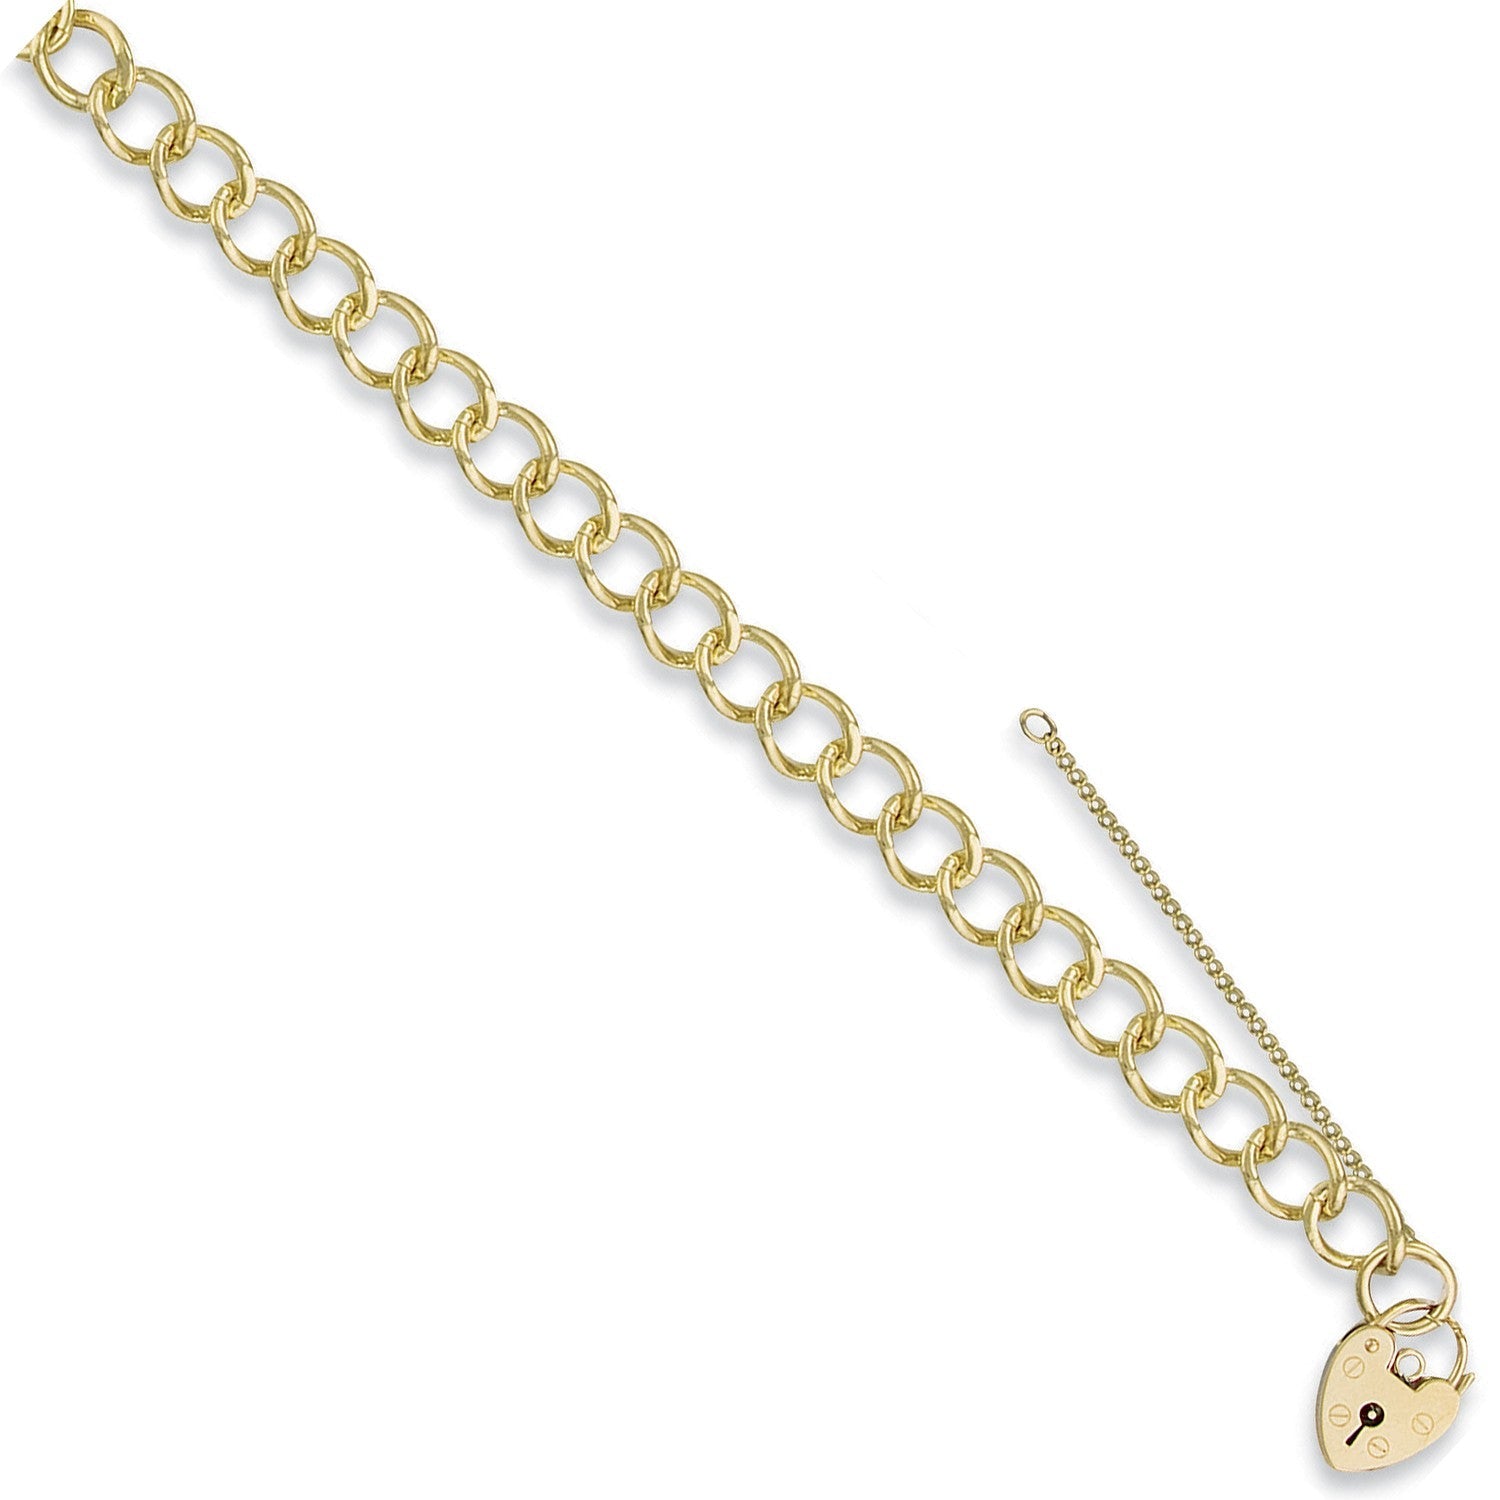 9ct Gold Open Curb & Padlock Charm Bracelet - FJewellery